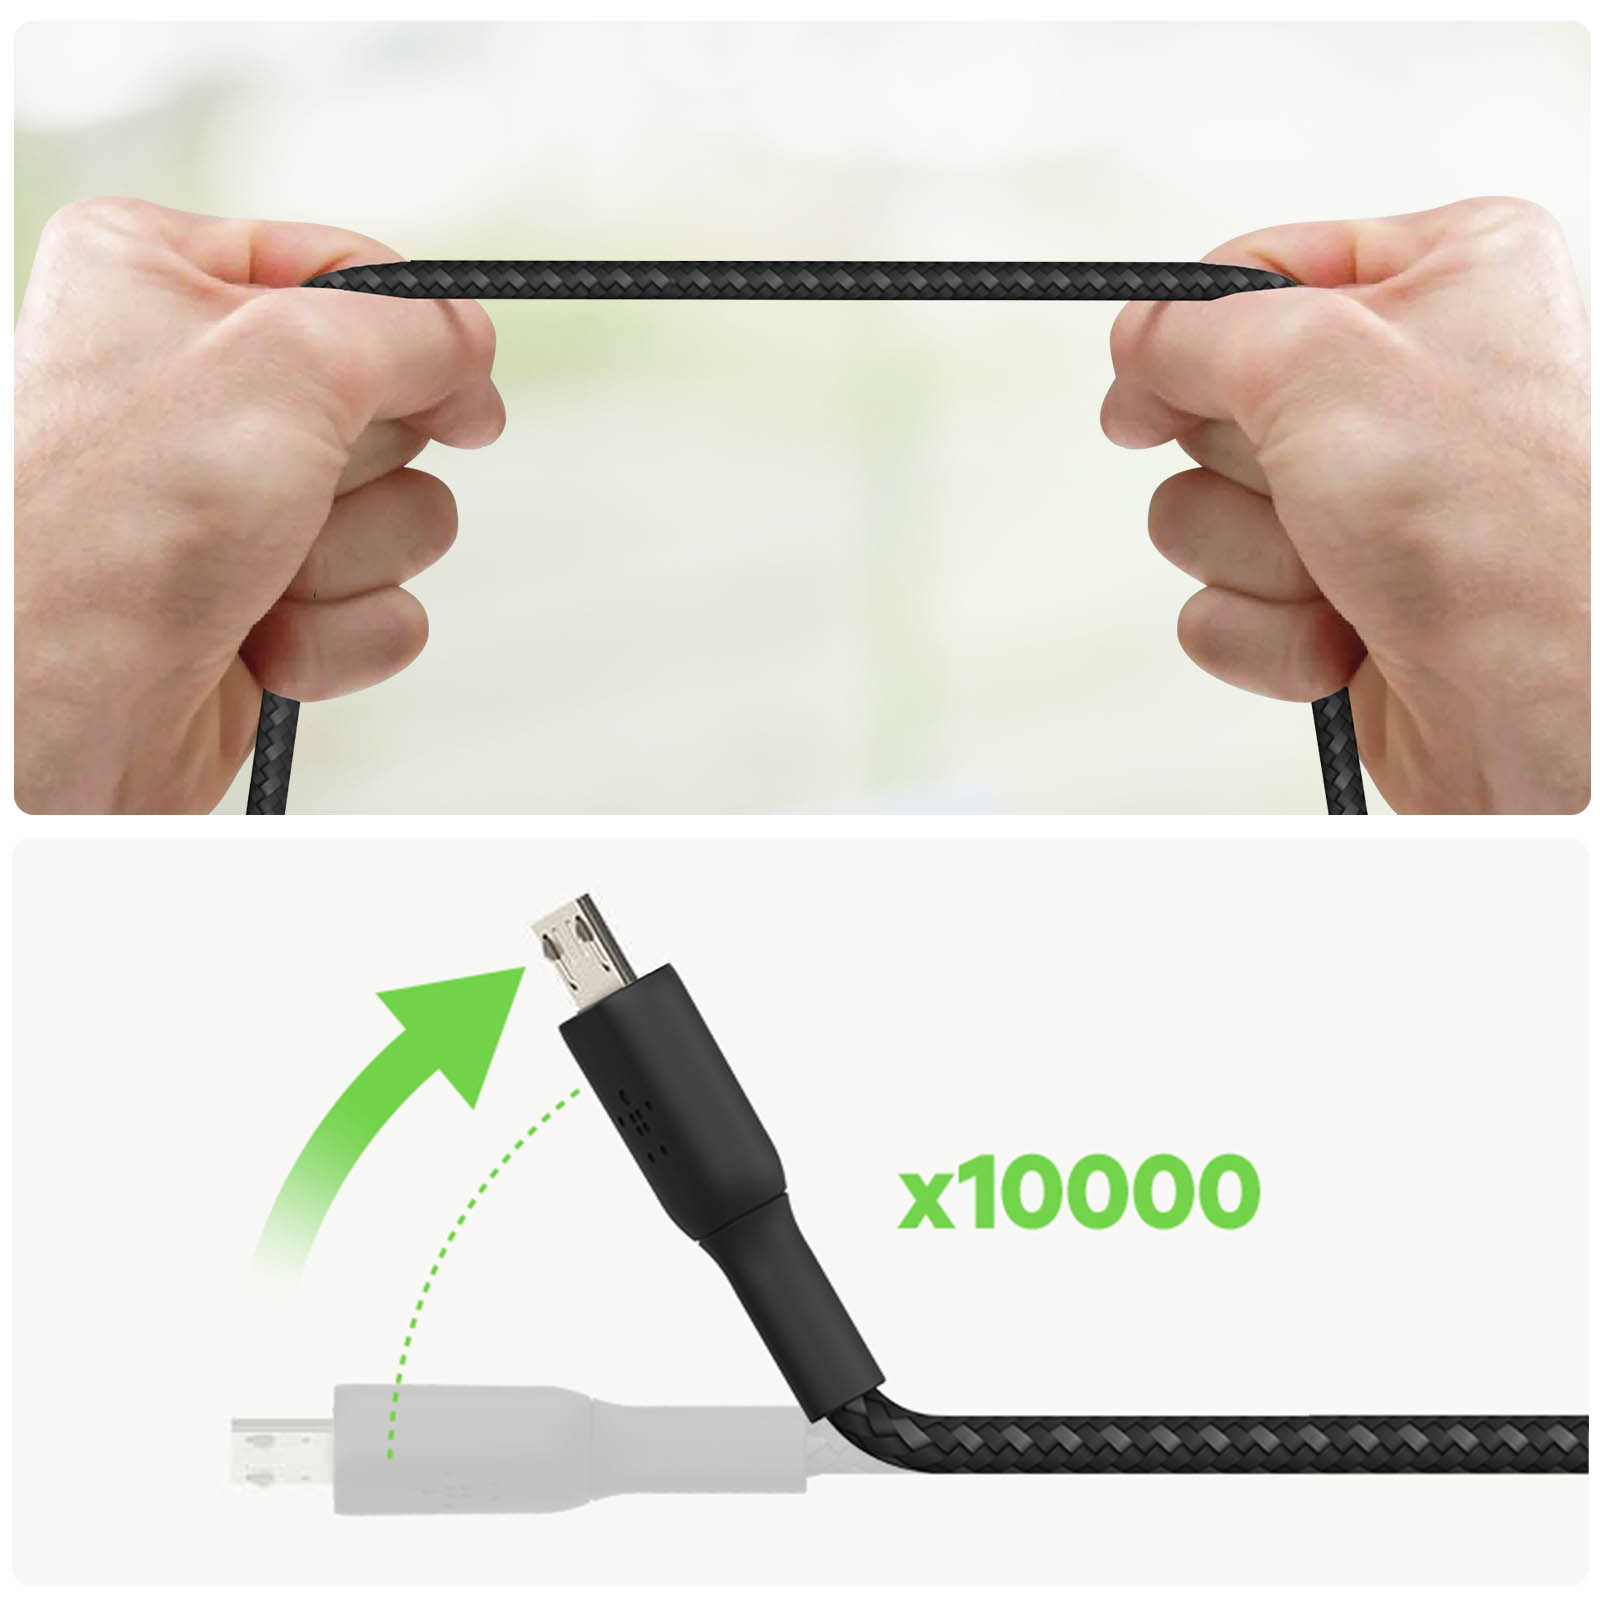 BELKIN USB USB-Kabel Micro-USB / Nylonkabel